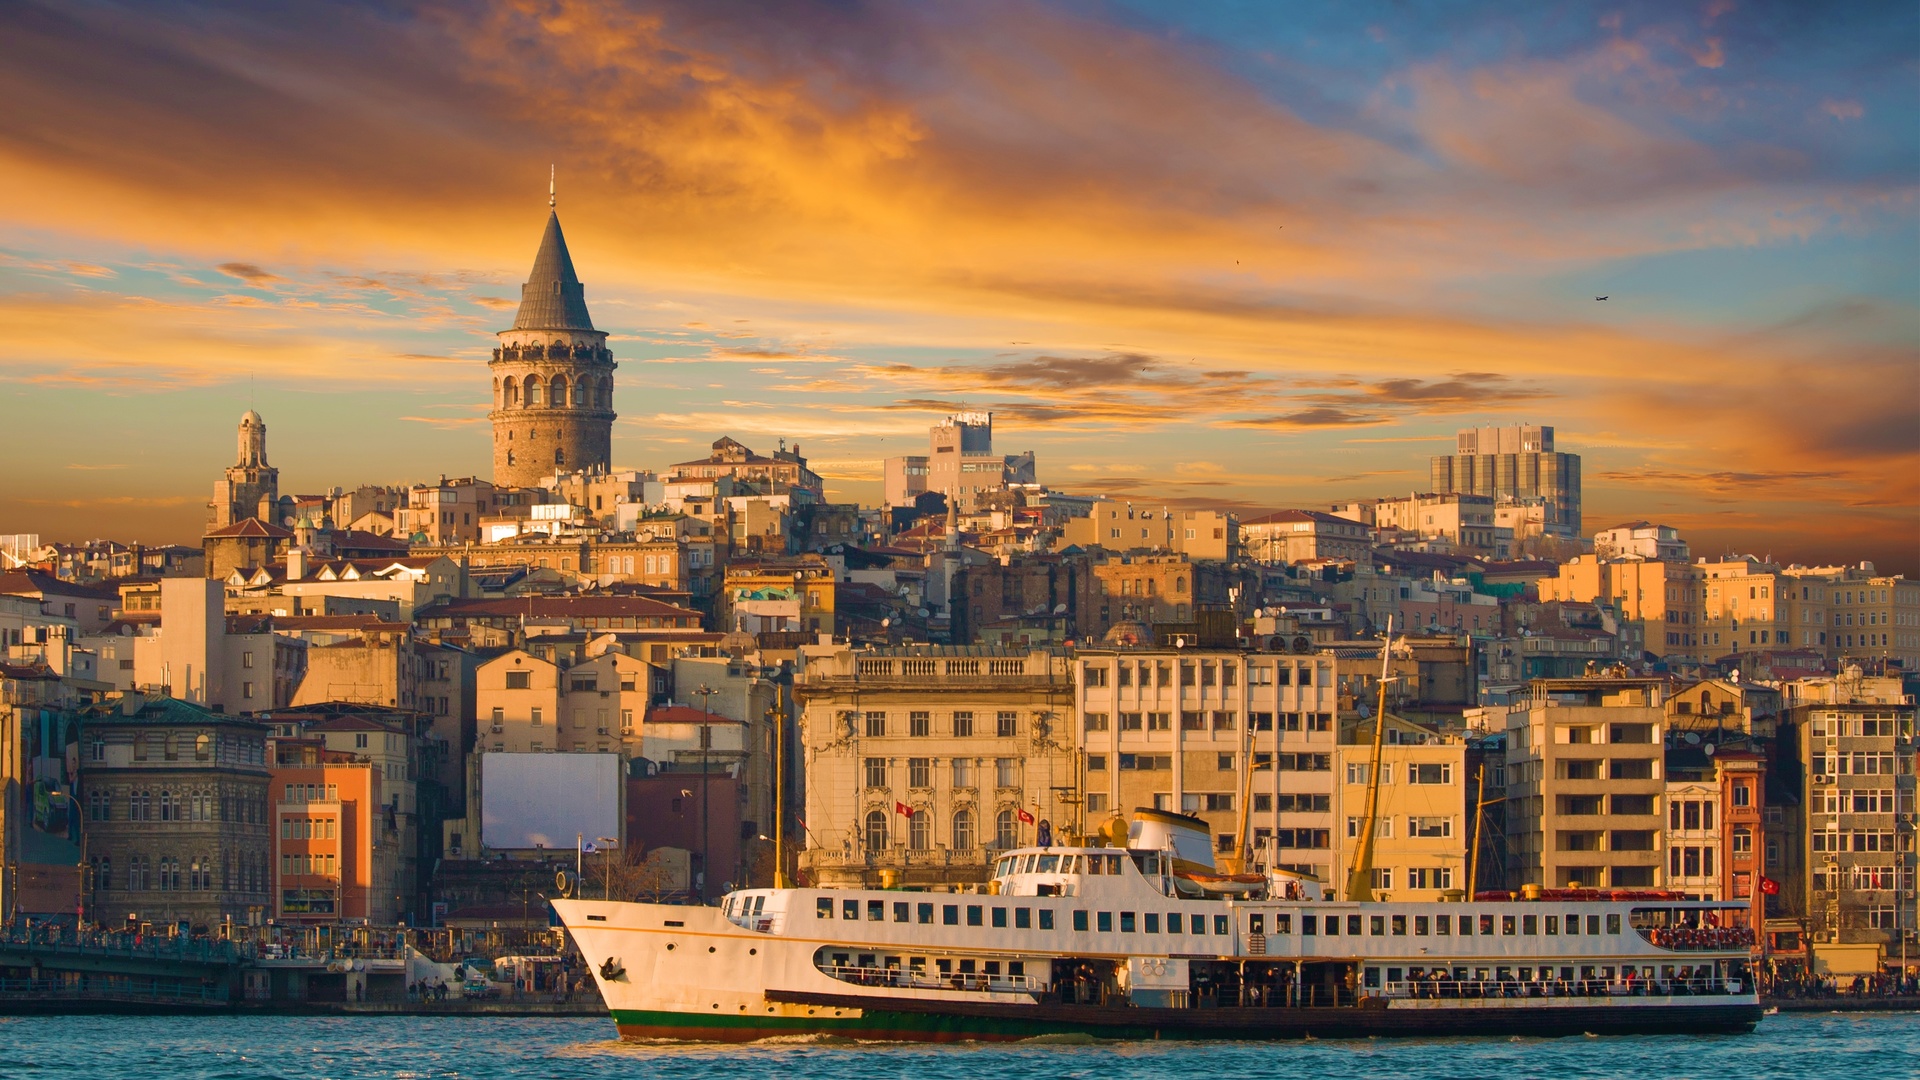 istanbul, turkey, buildings, sea of marmara, city, galata tower, ferry, ship, nature, landscape